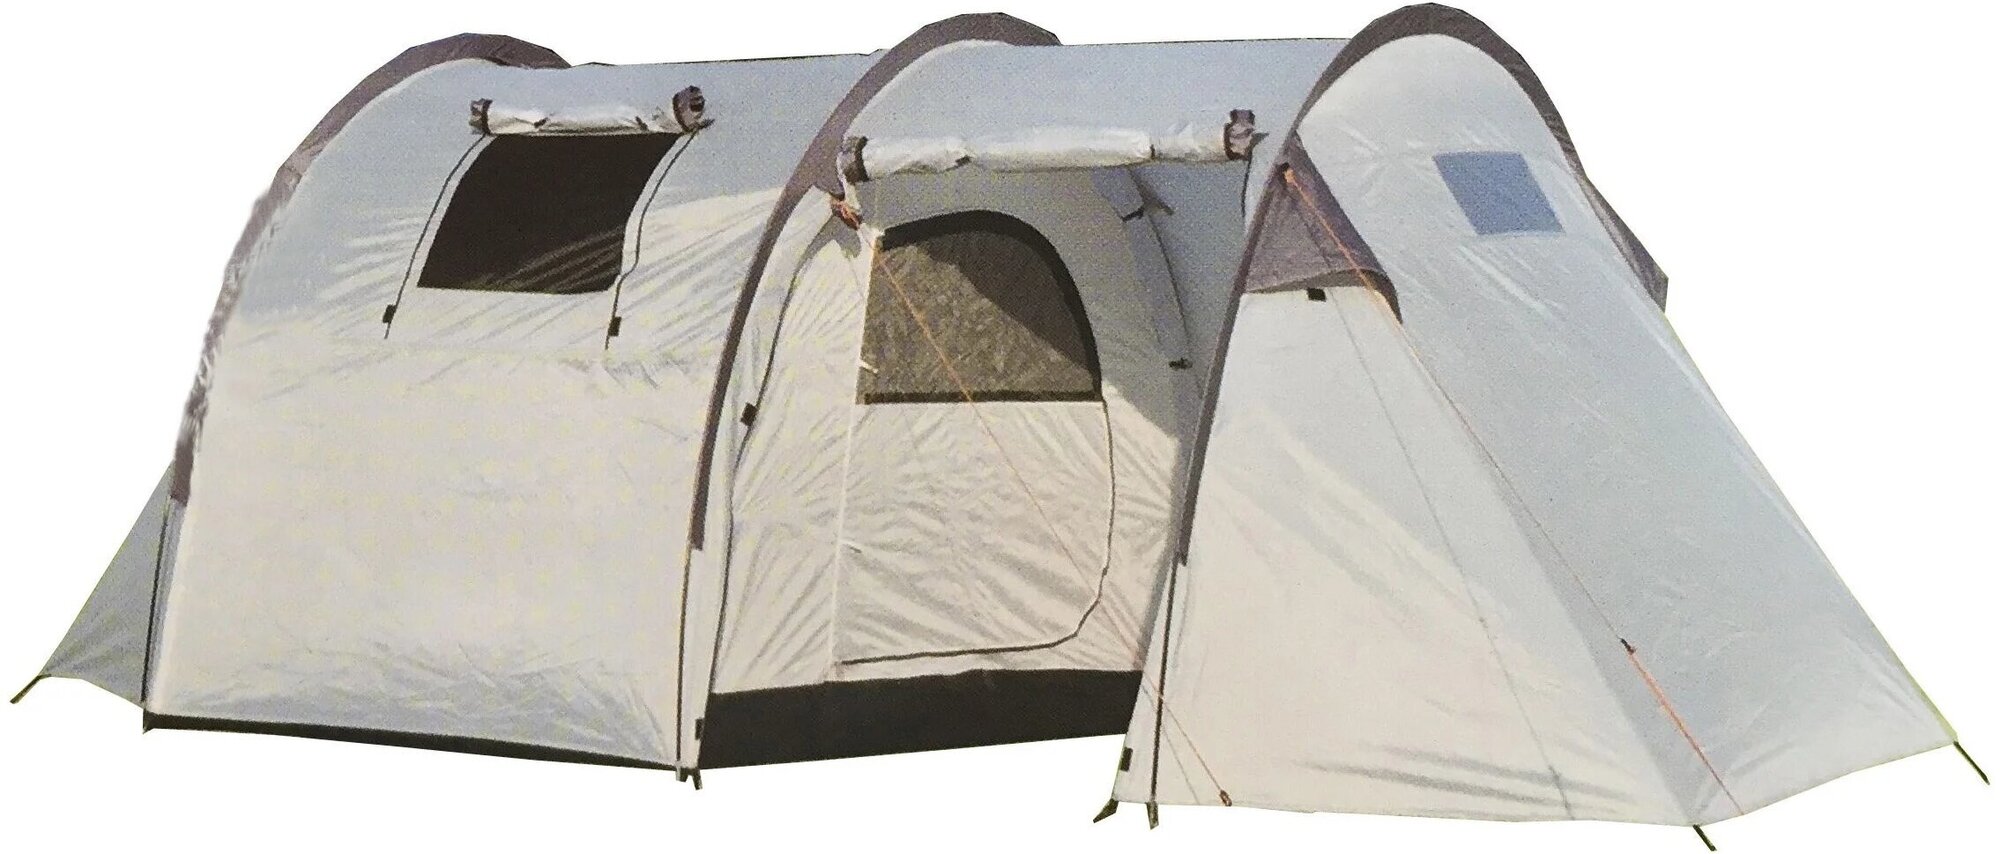 Палатка кемпинговая четырехместная LANYU LY-1909, серый